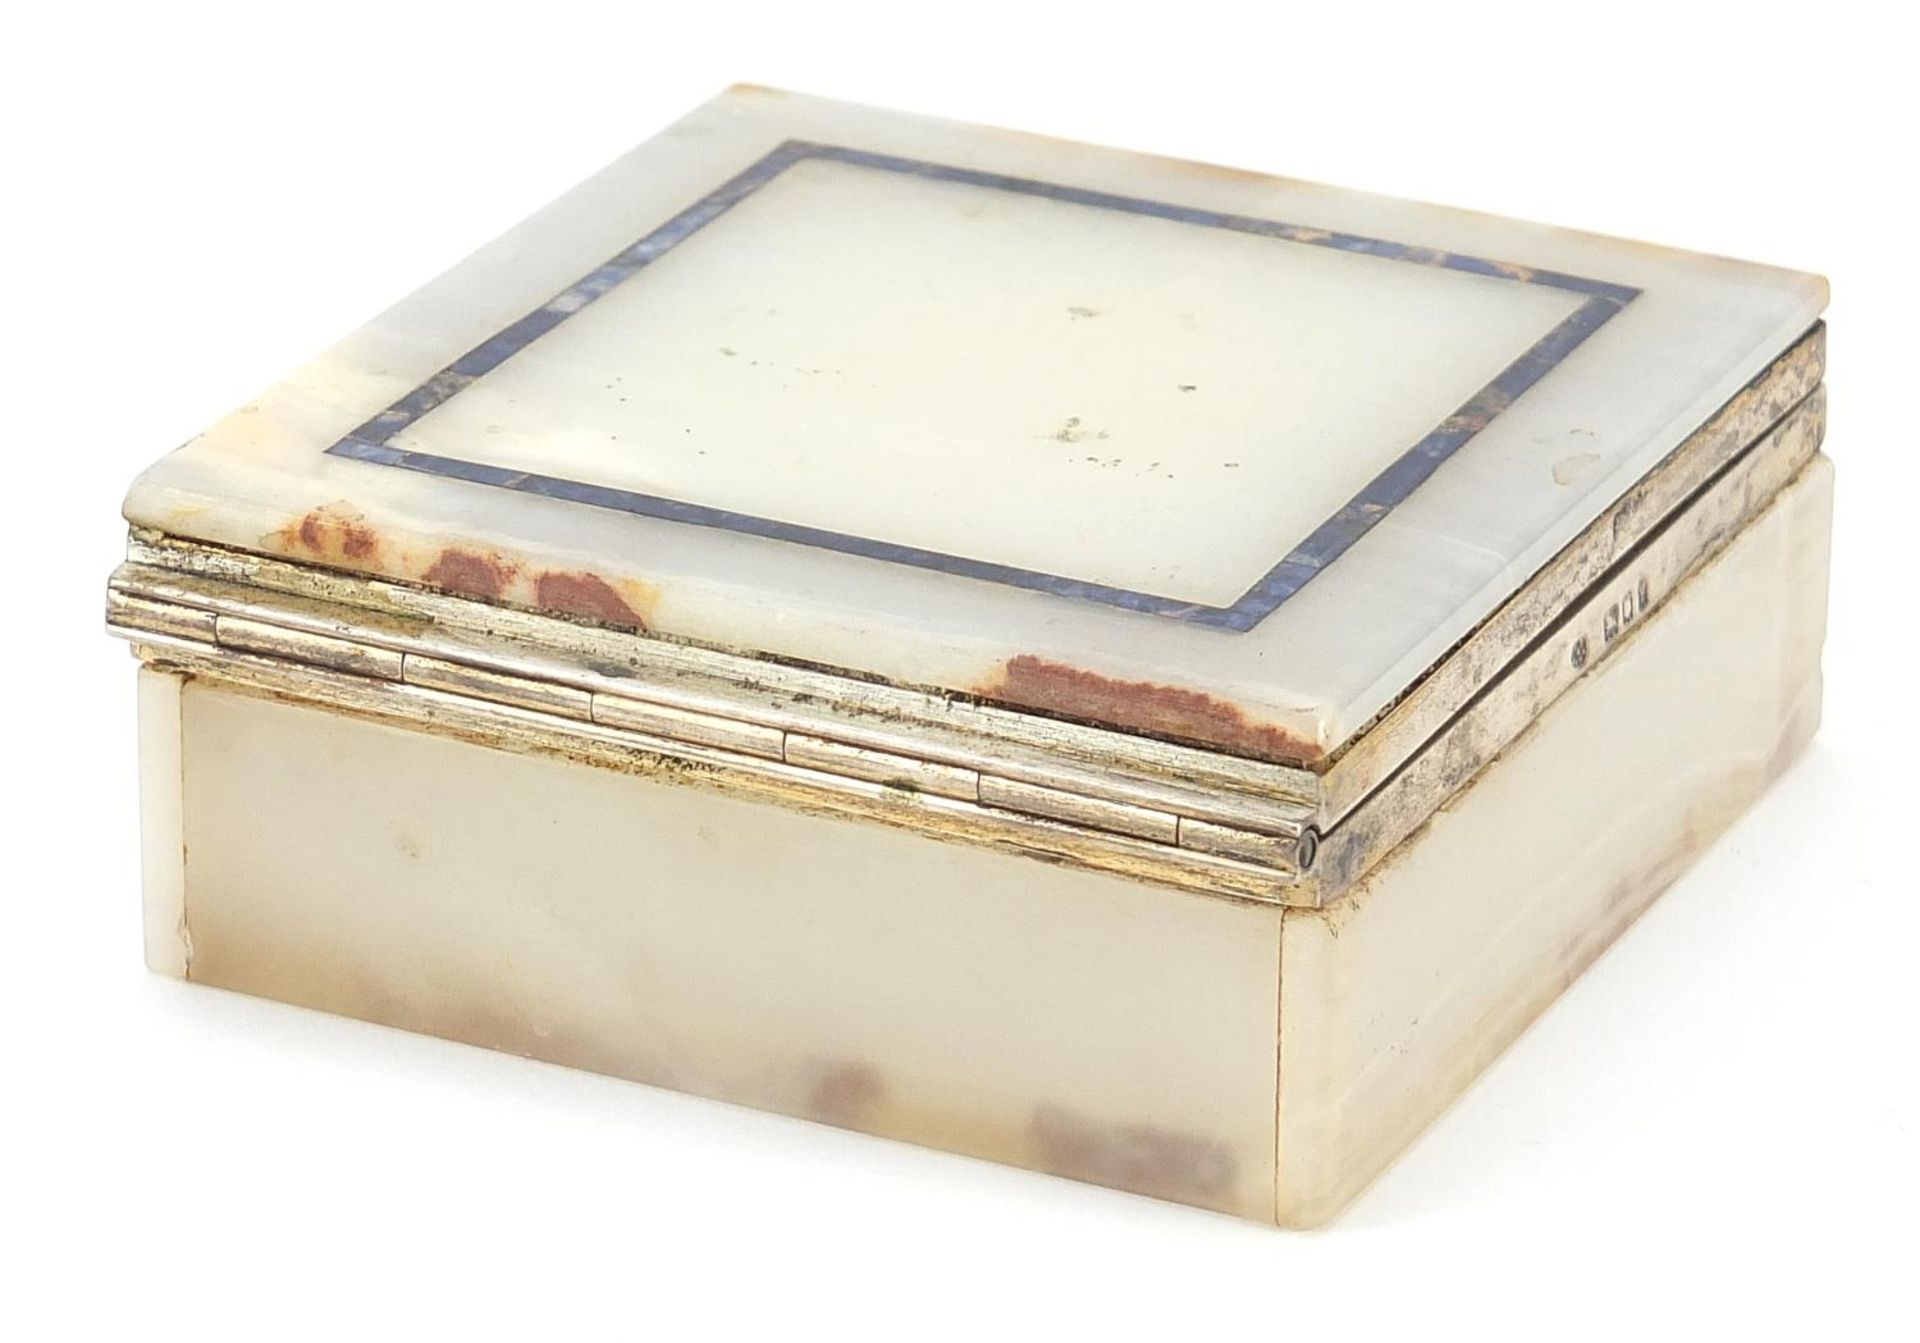 Silver mounted onyx and lapis lazuli cigarette box, 4.5cm H x 9.5cm W x 10cm D One of the front - Image 2 of 3